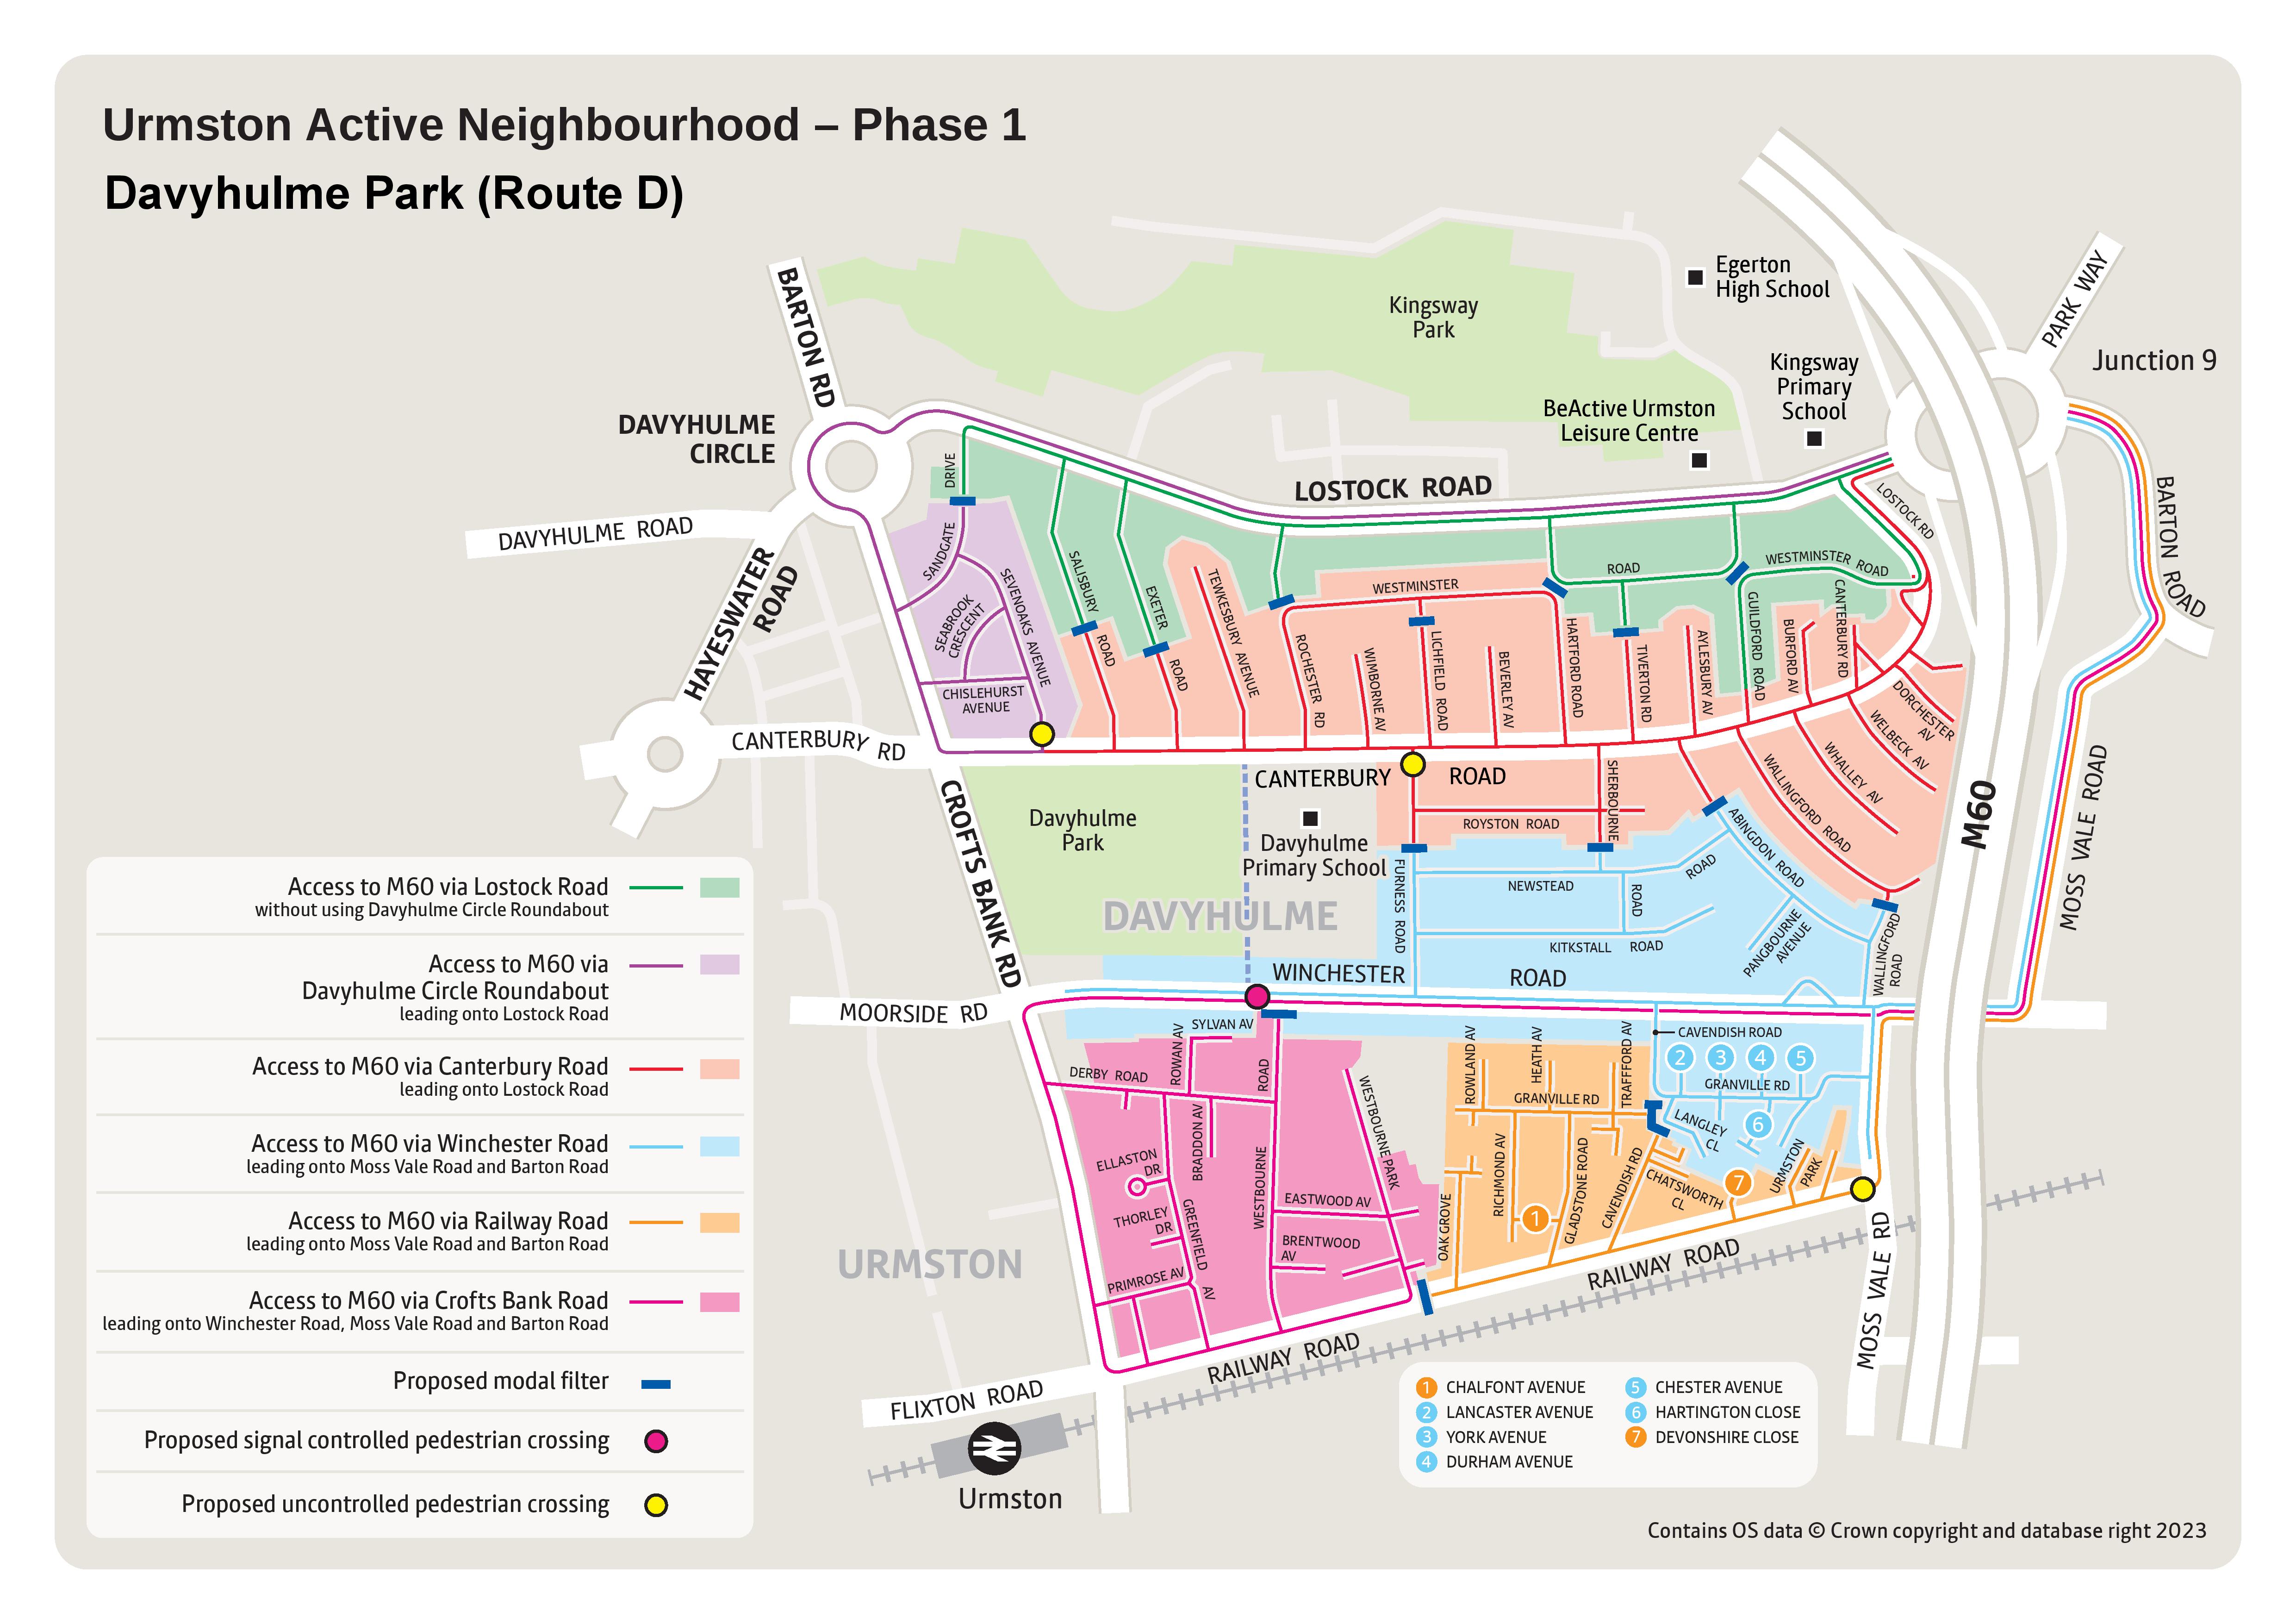 Davyhulme Park Urmston Active Neighbourhood Phase 1 Route D